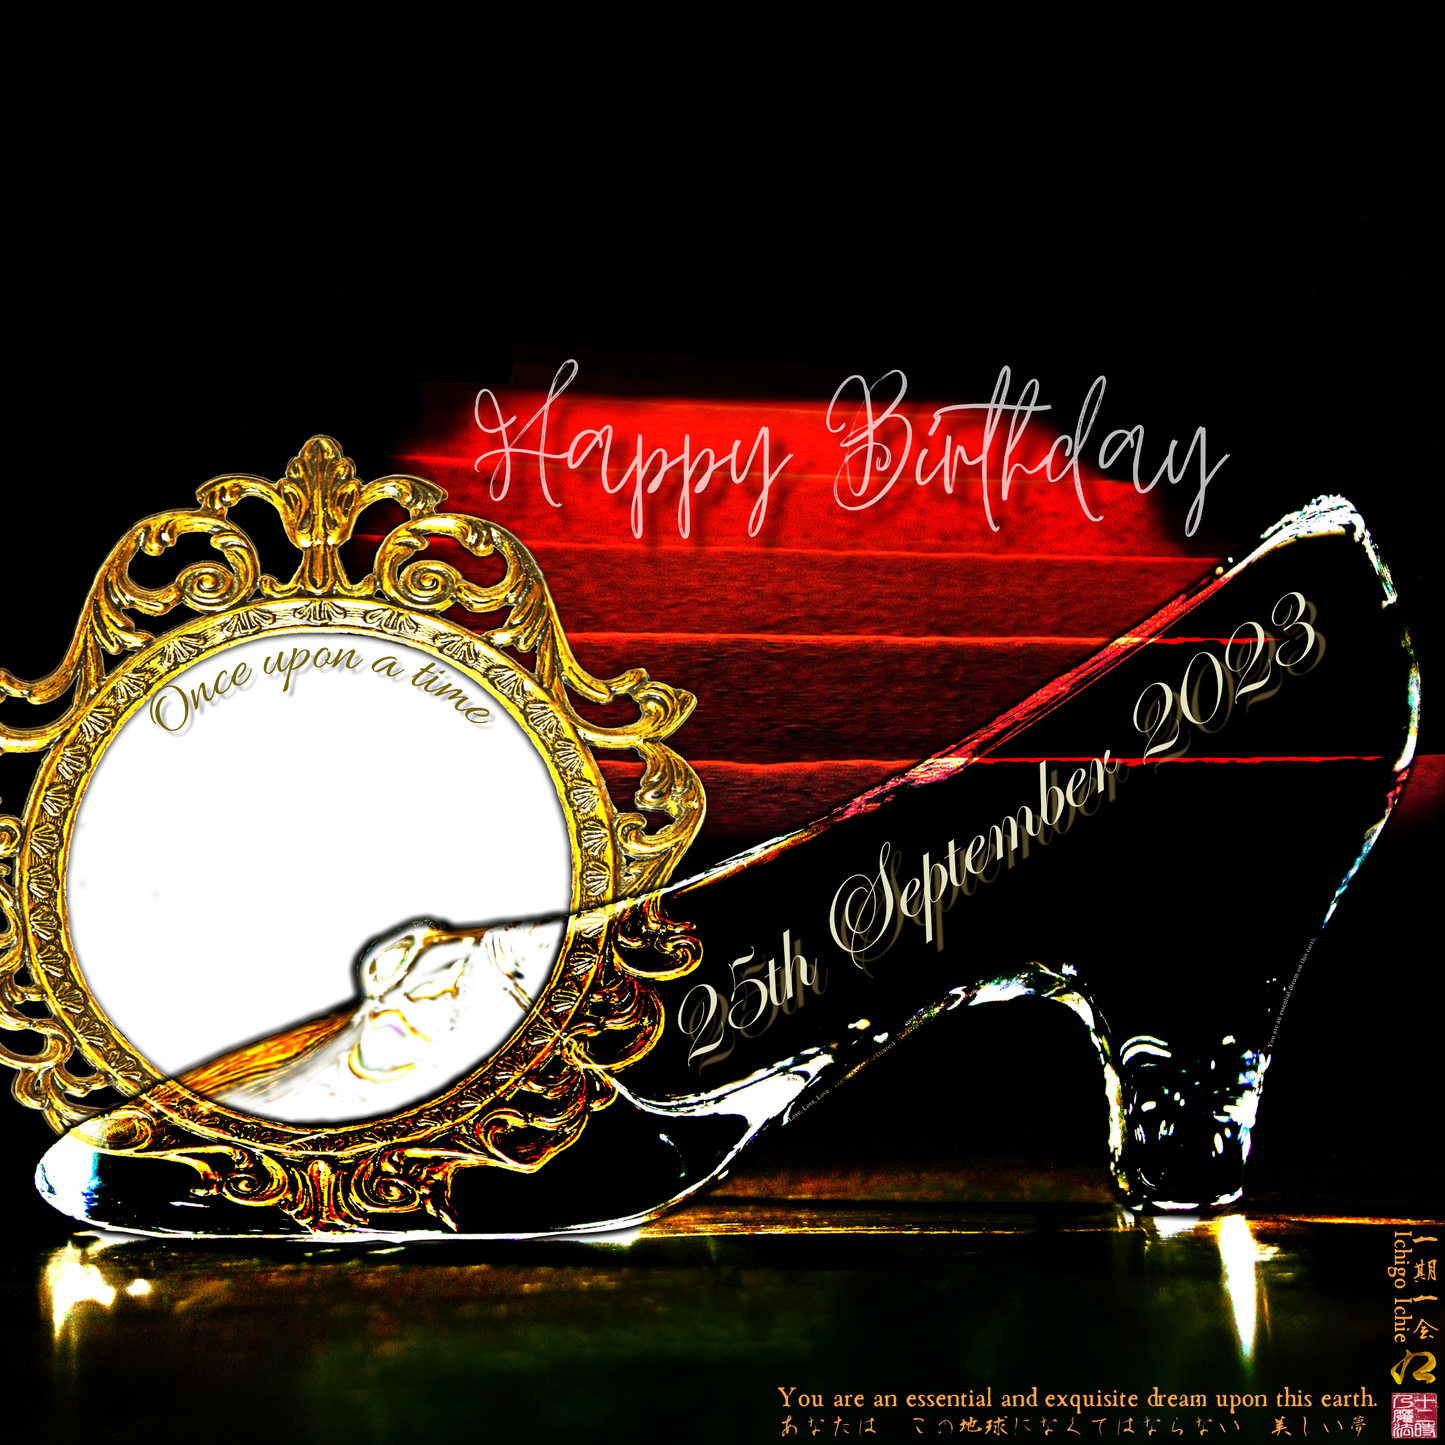 Happy Birthday Glass Slipper "Ichigo Ichie" 25th September 2023 the Left (1-of-1) NFT Art